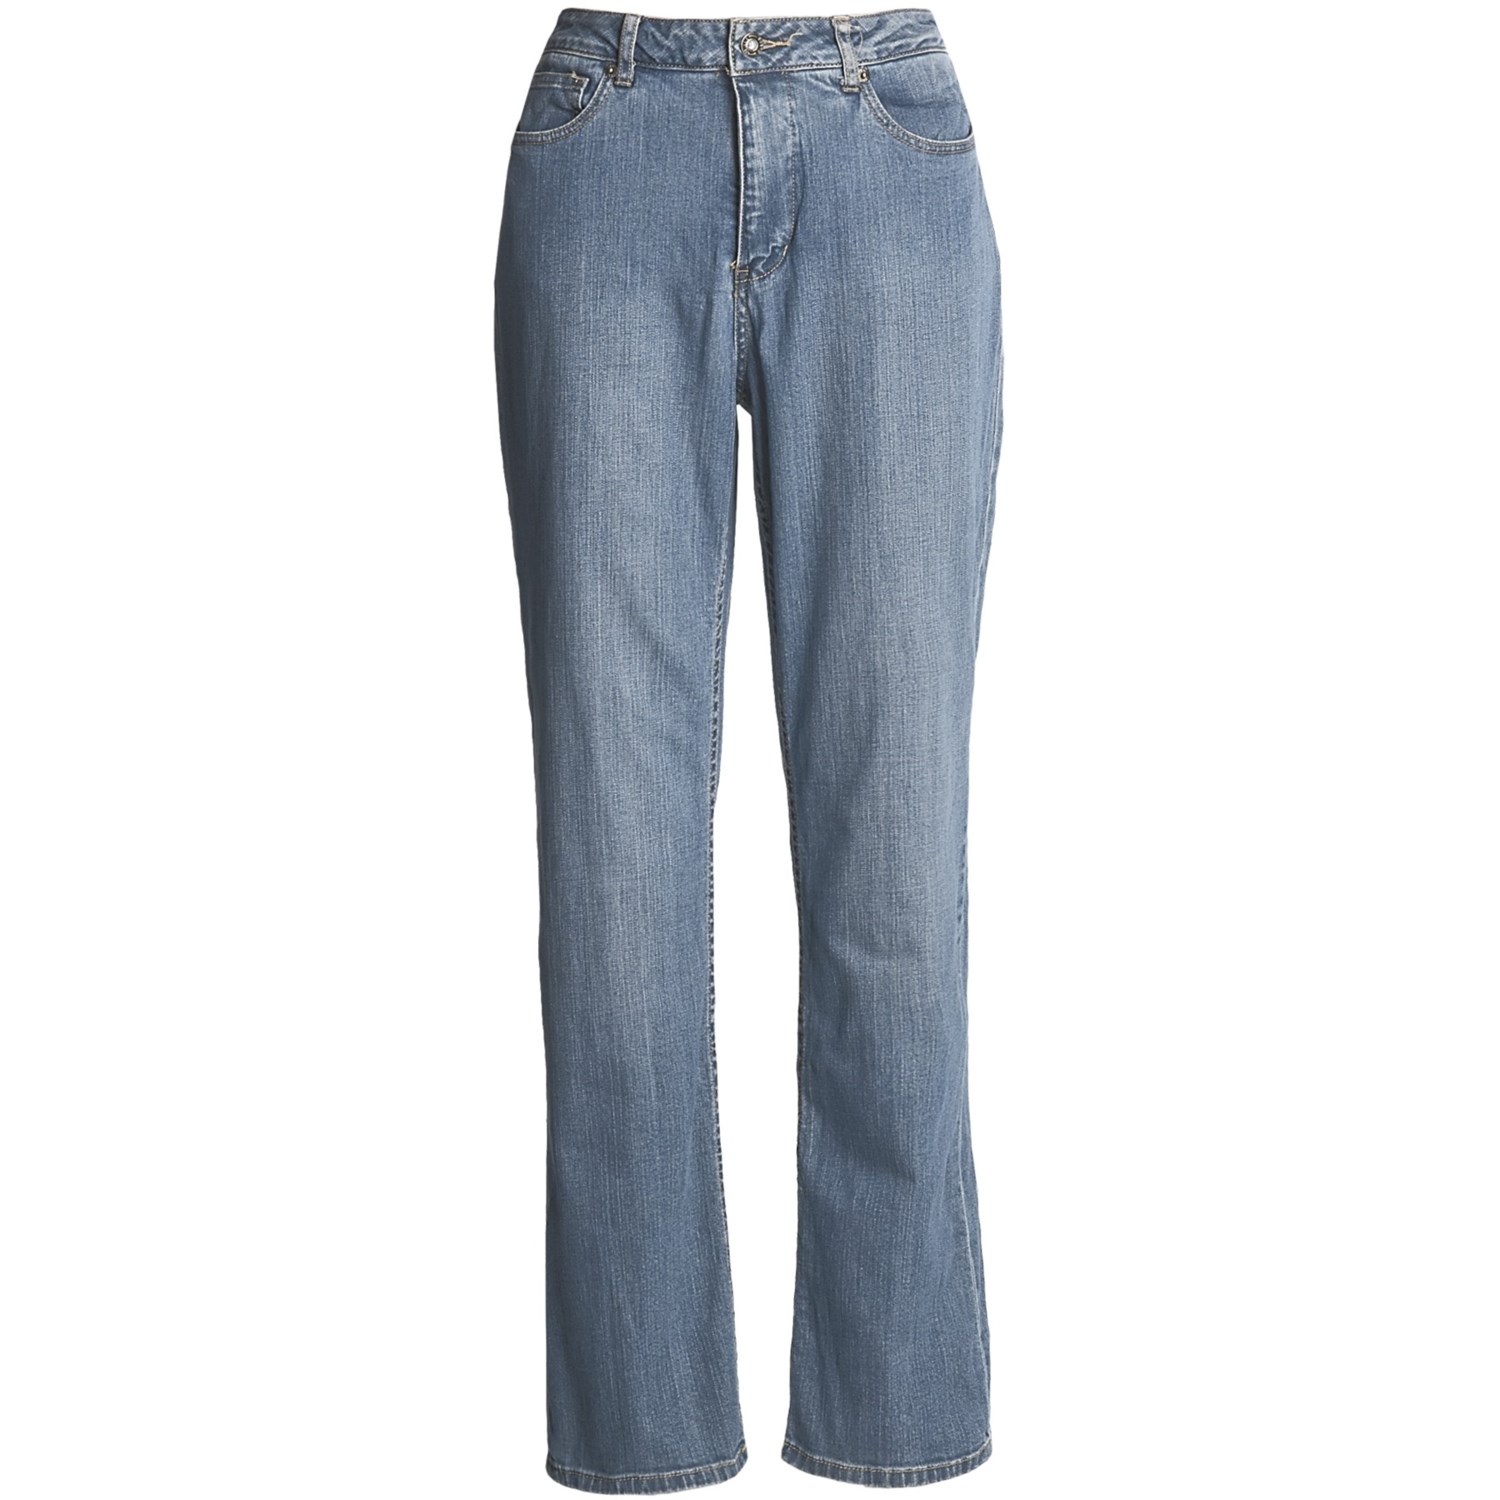 Five-Pocket Denim Jeans (For Women) 3129P - Save 74%